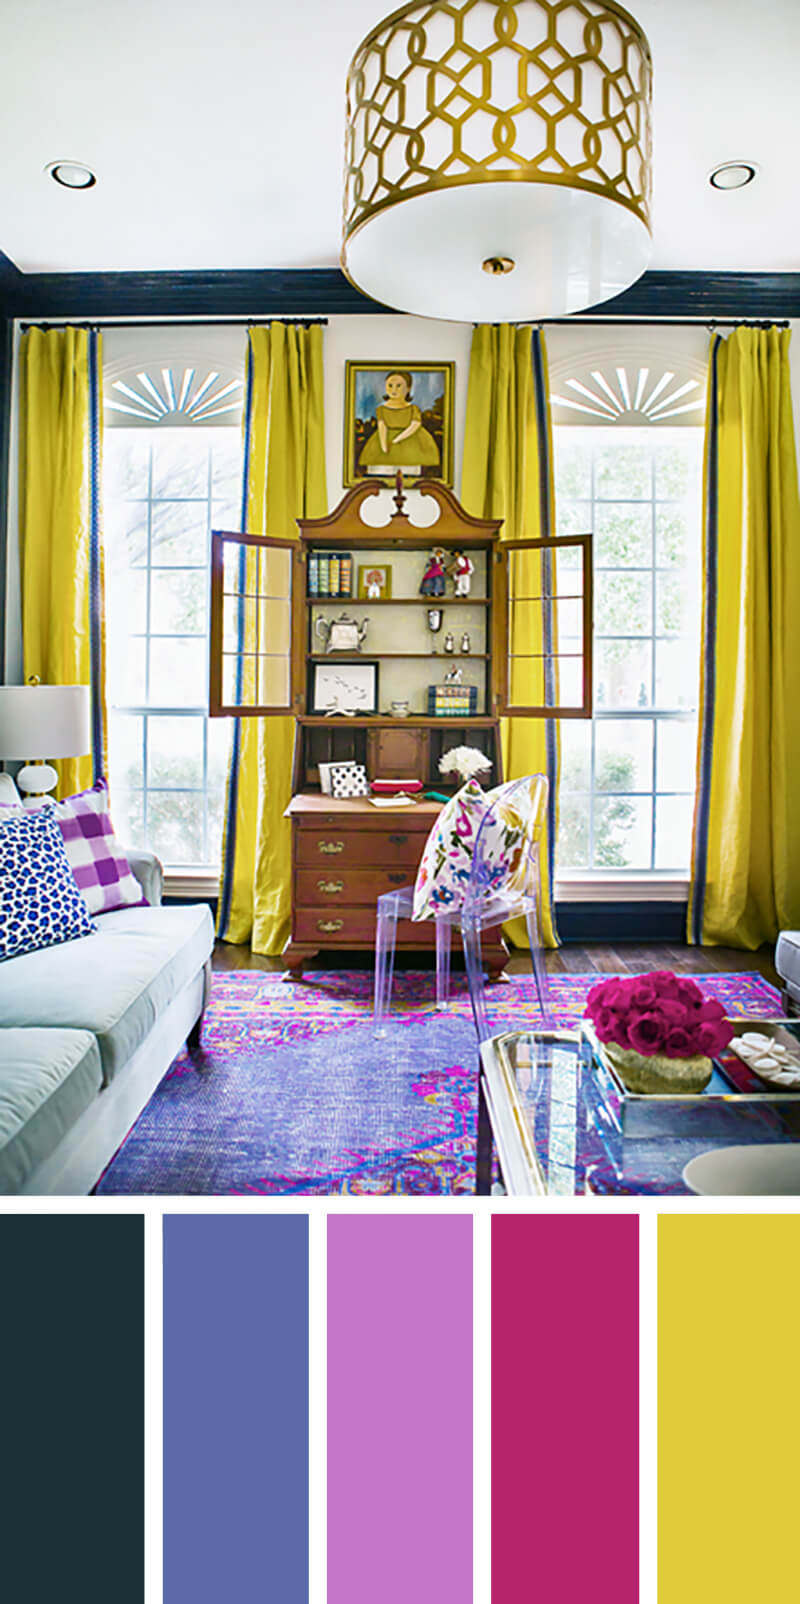 03-living-room-color-schemes-homebnc.jpg